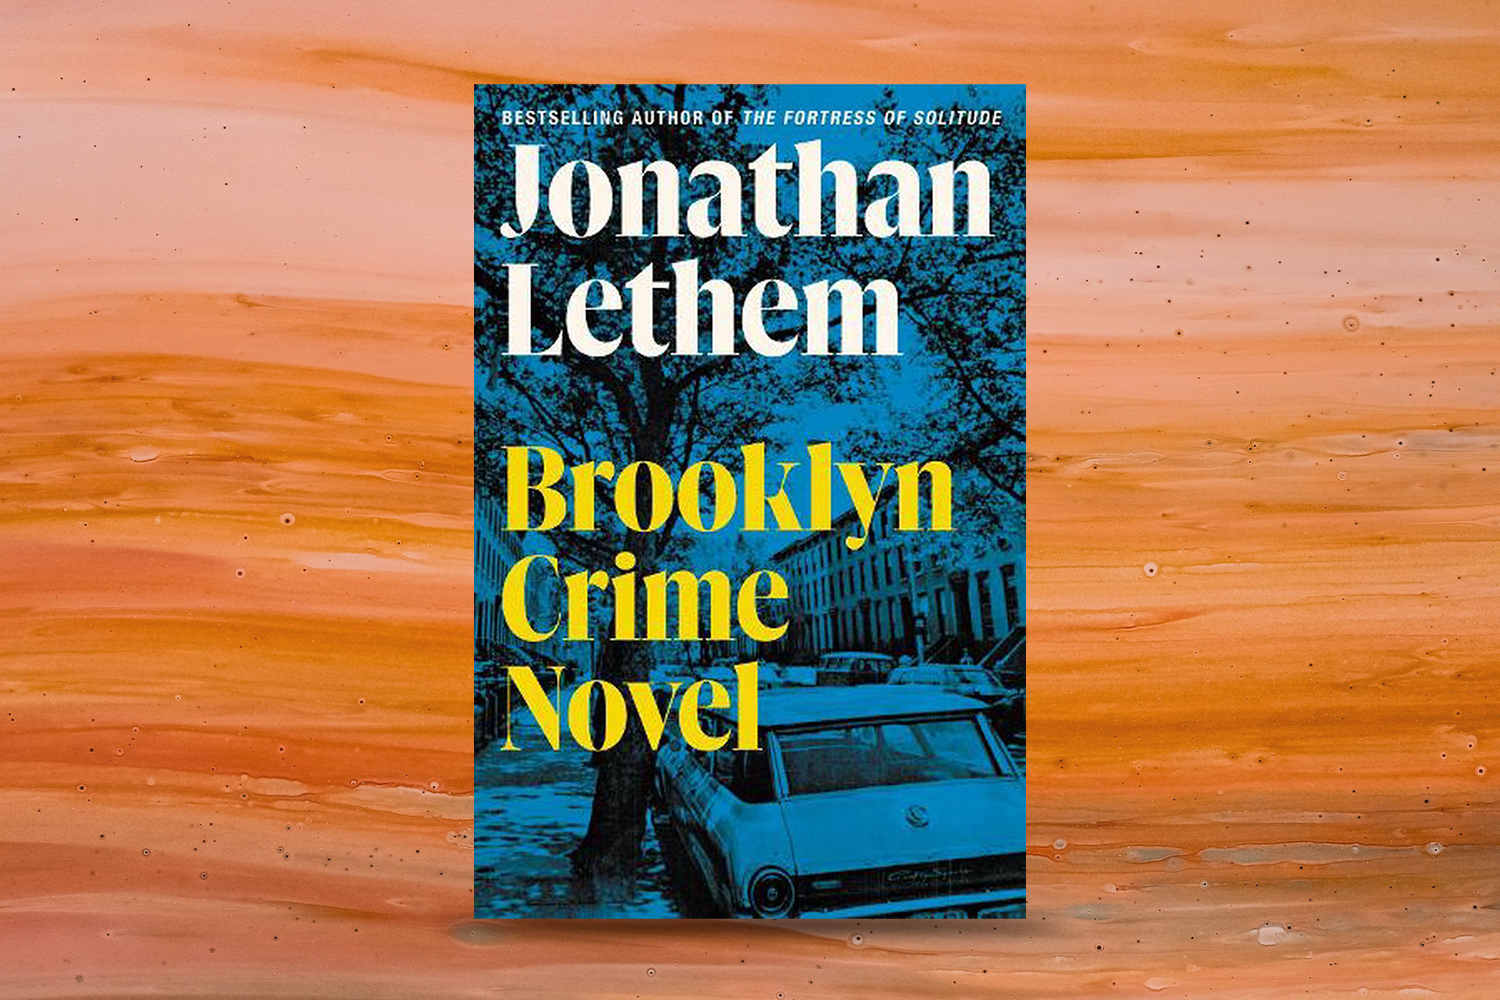 Jonathan Lethem, Brooklyn Crime Novel